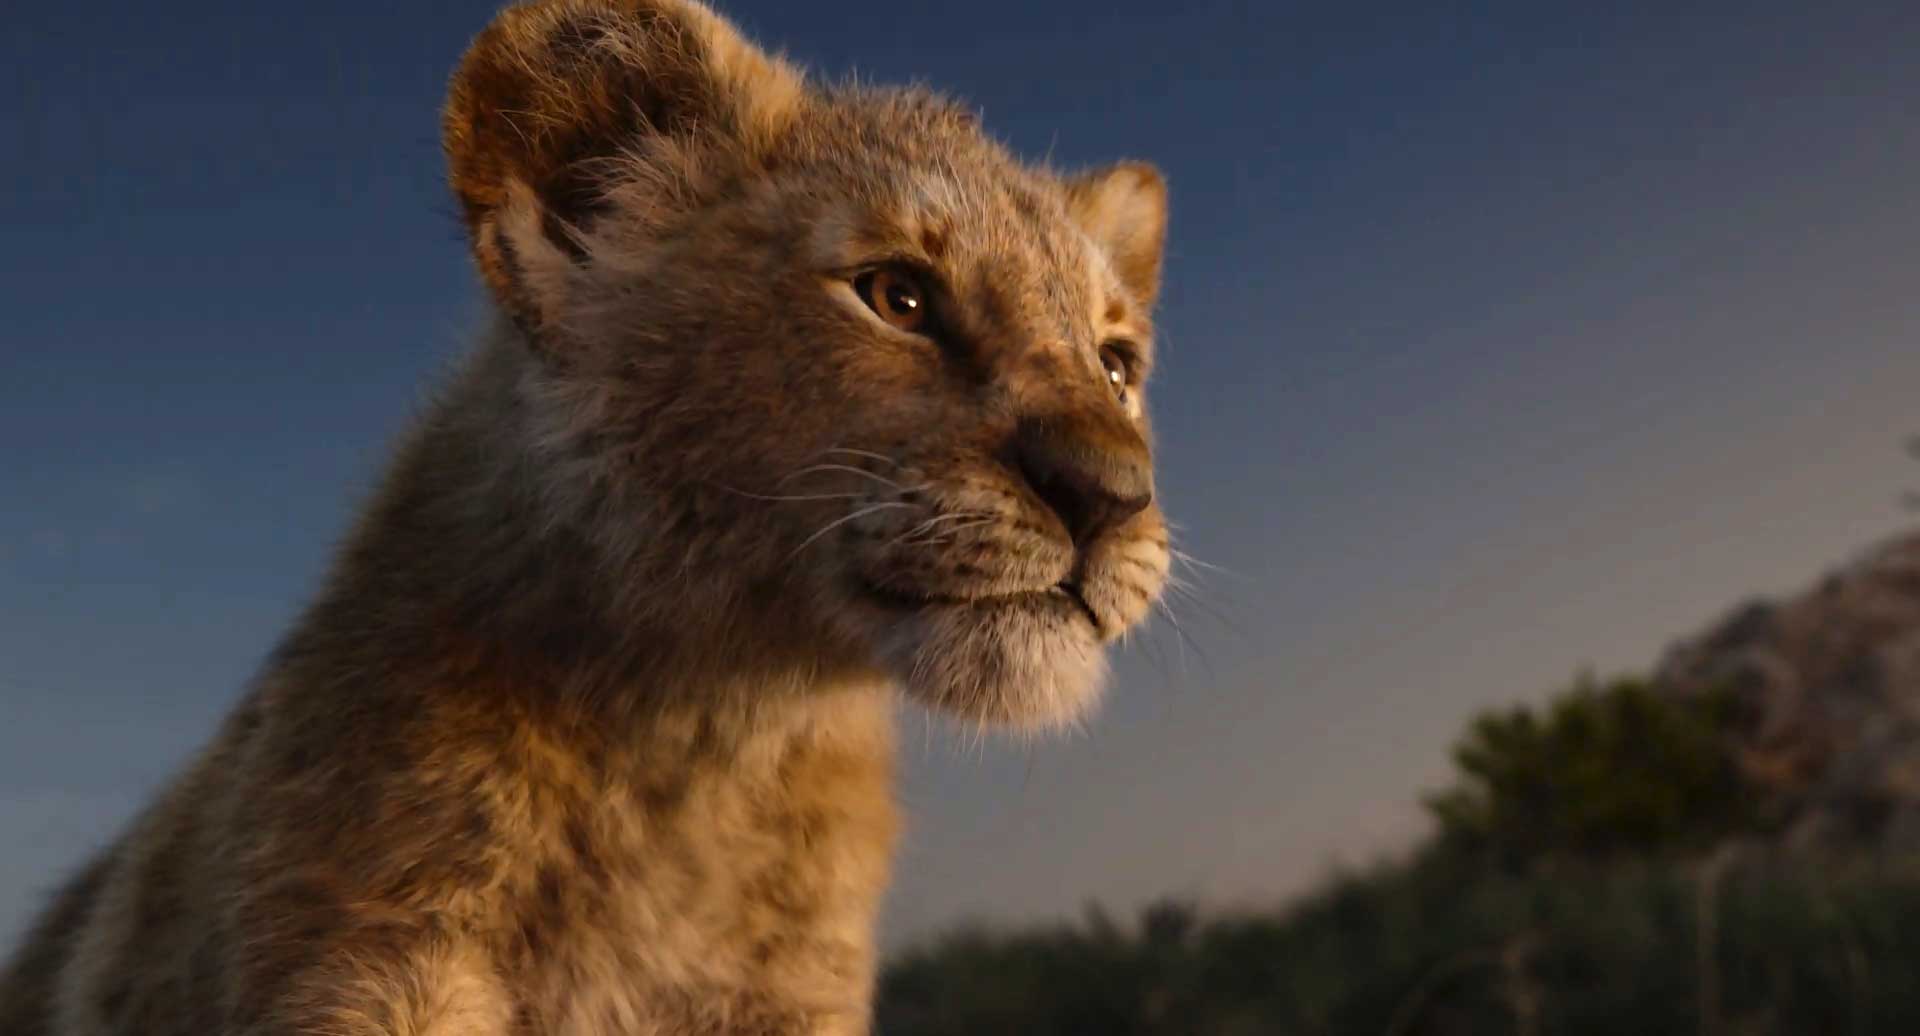 The Lion King 2019 Still - Simba Mufasa